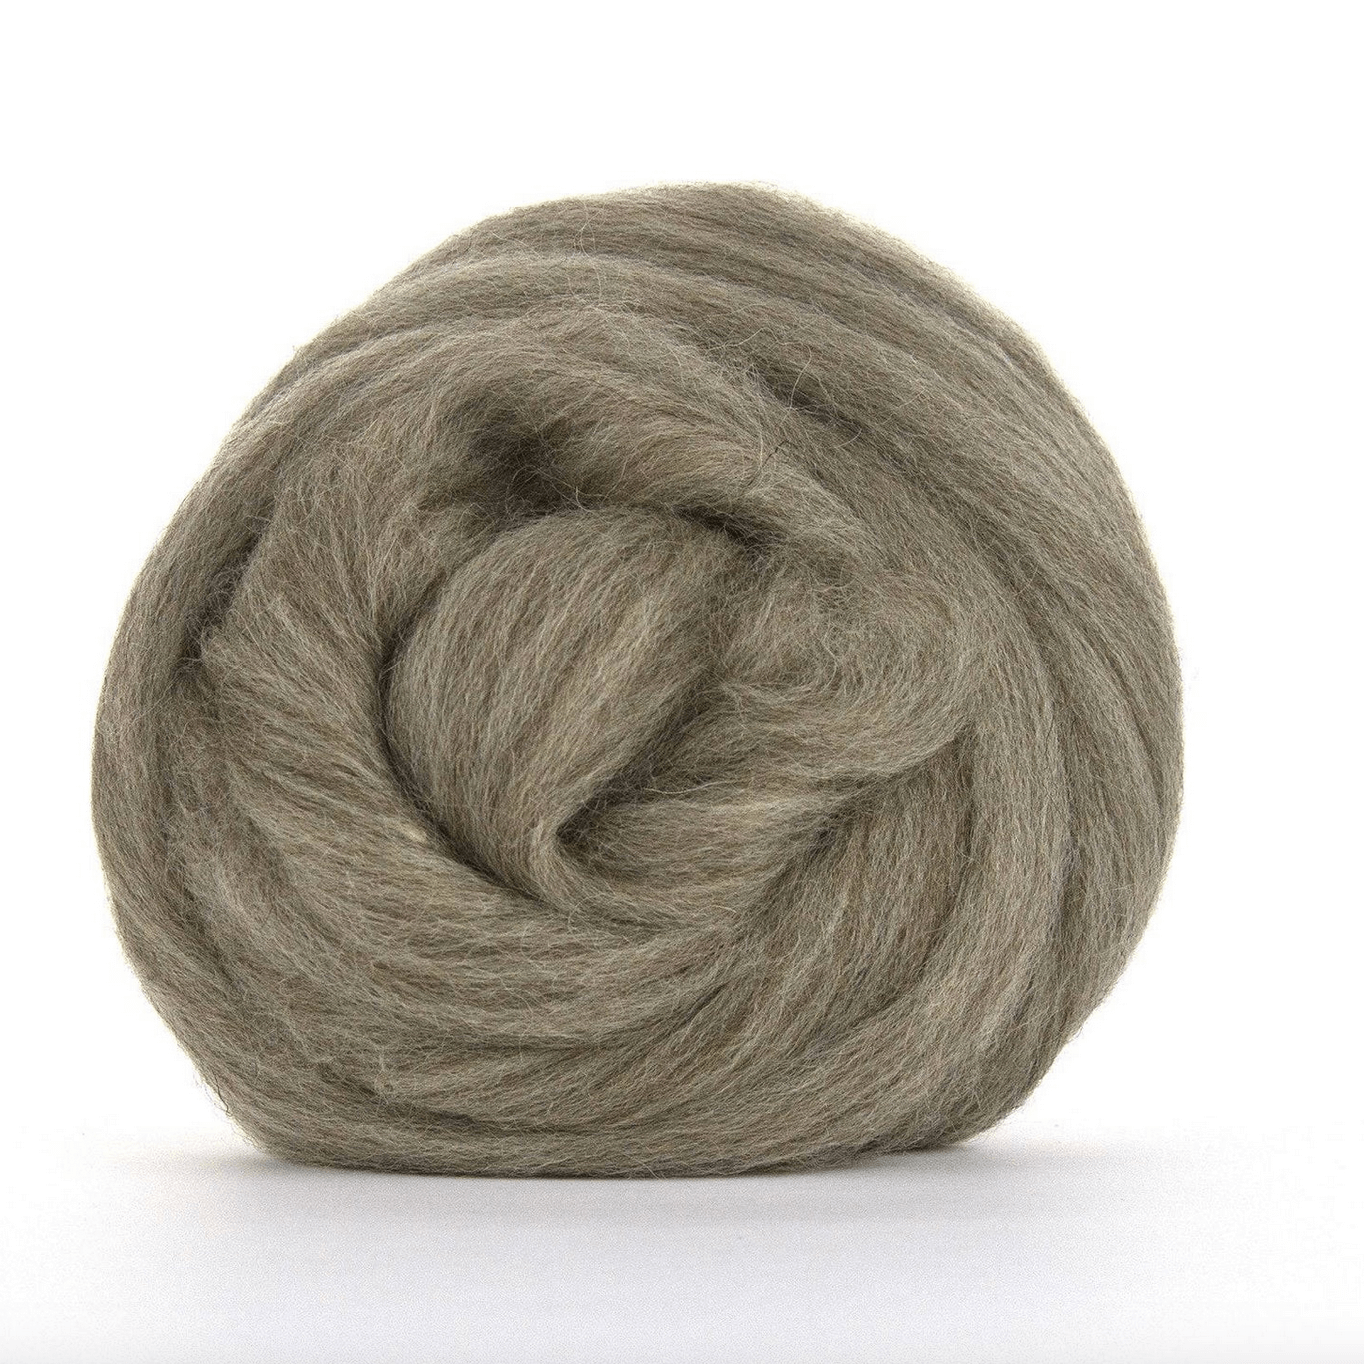 An unspun light brown BFL top for spinning, felting, dyeing, weaving